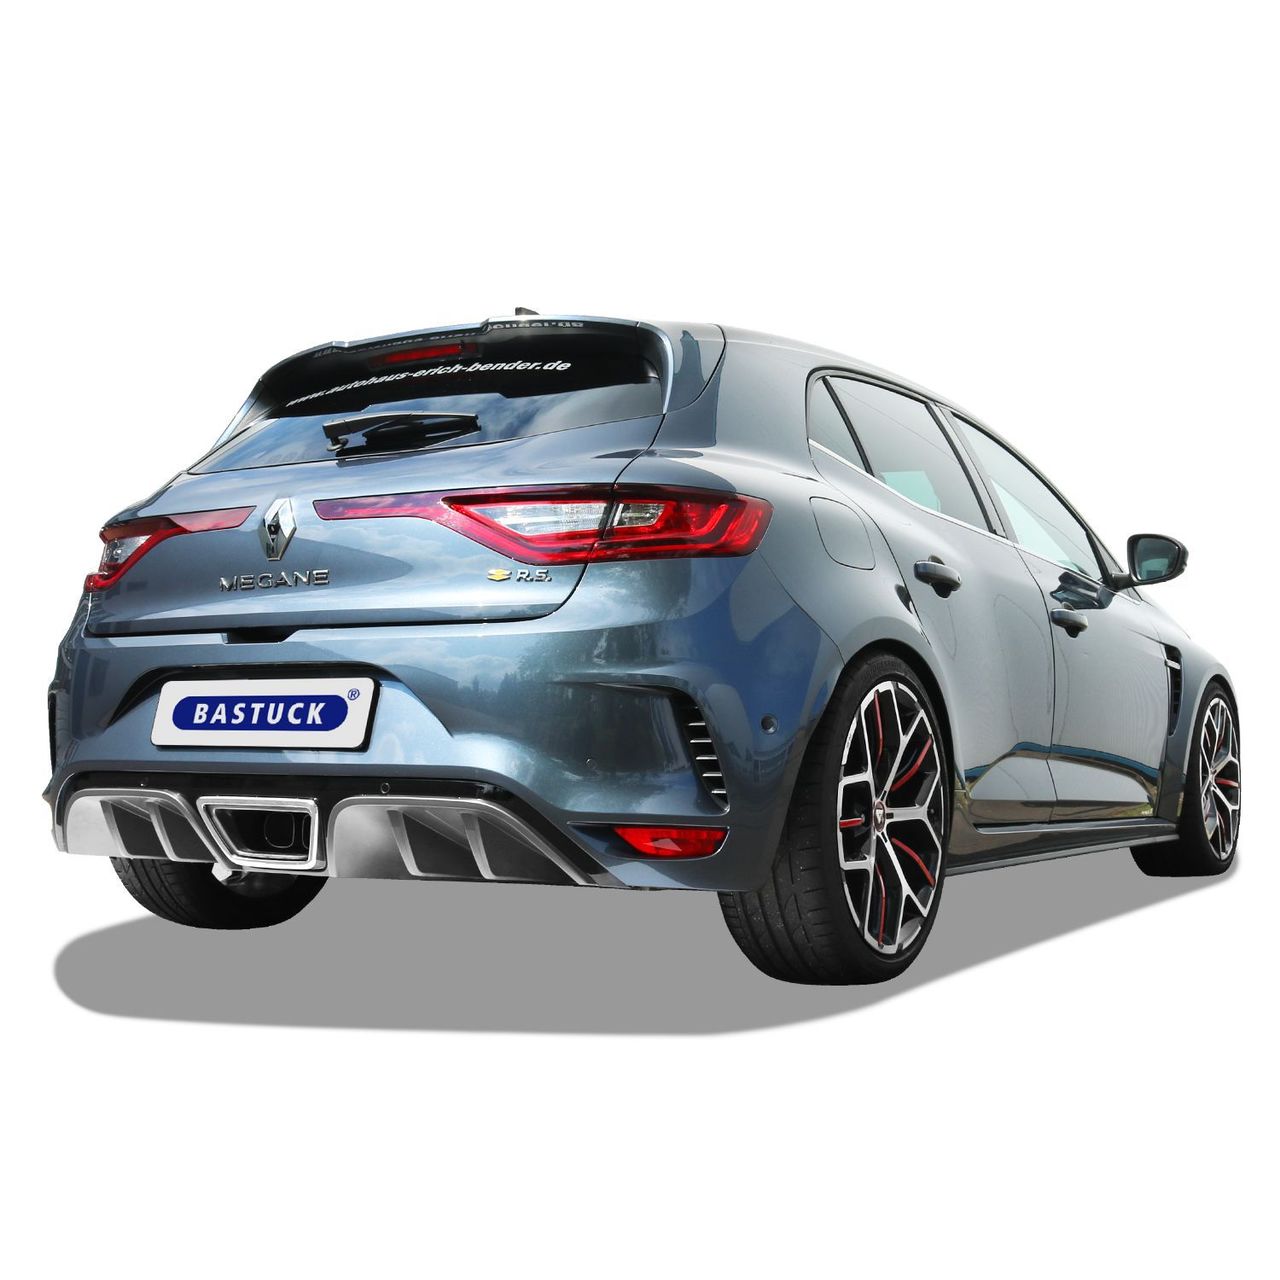 https://www.bastuck.de/files/bastuck/News/Sport/2020/2020-09/Renault-Megane-4-RS-car01-oL.jpg